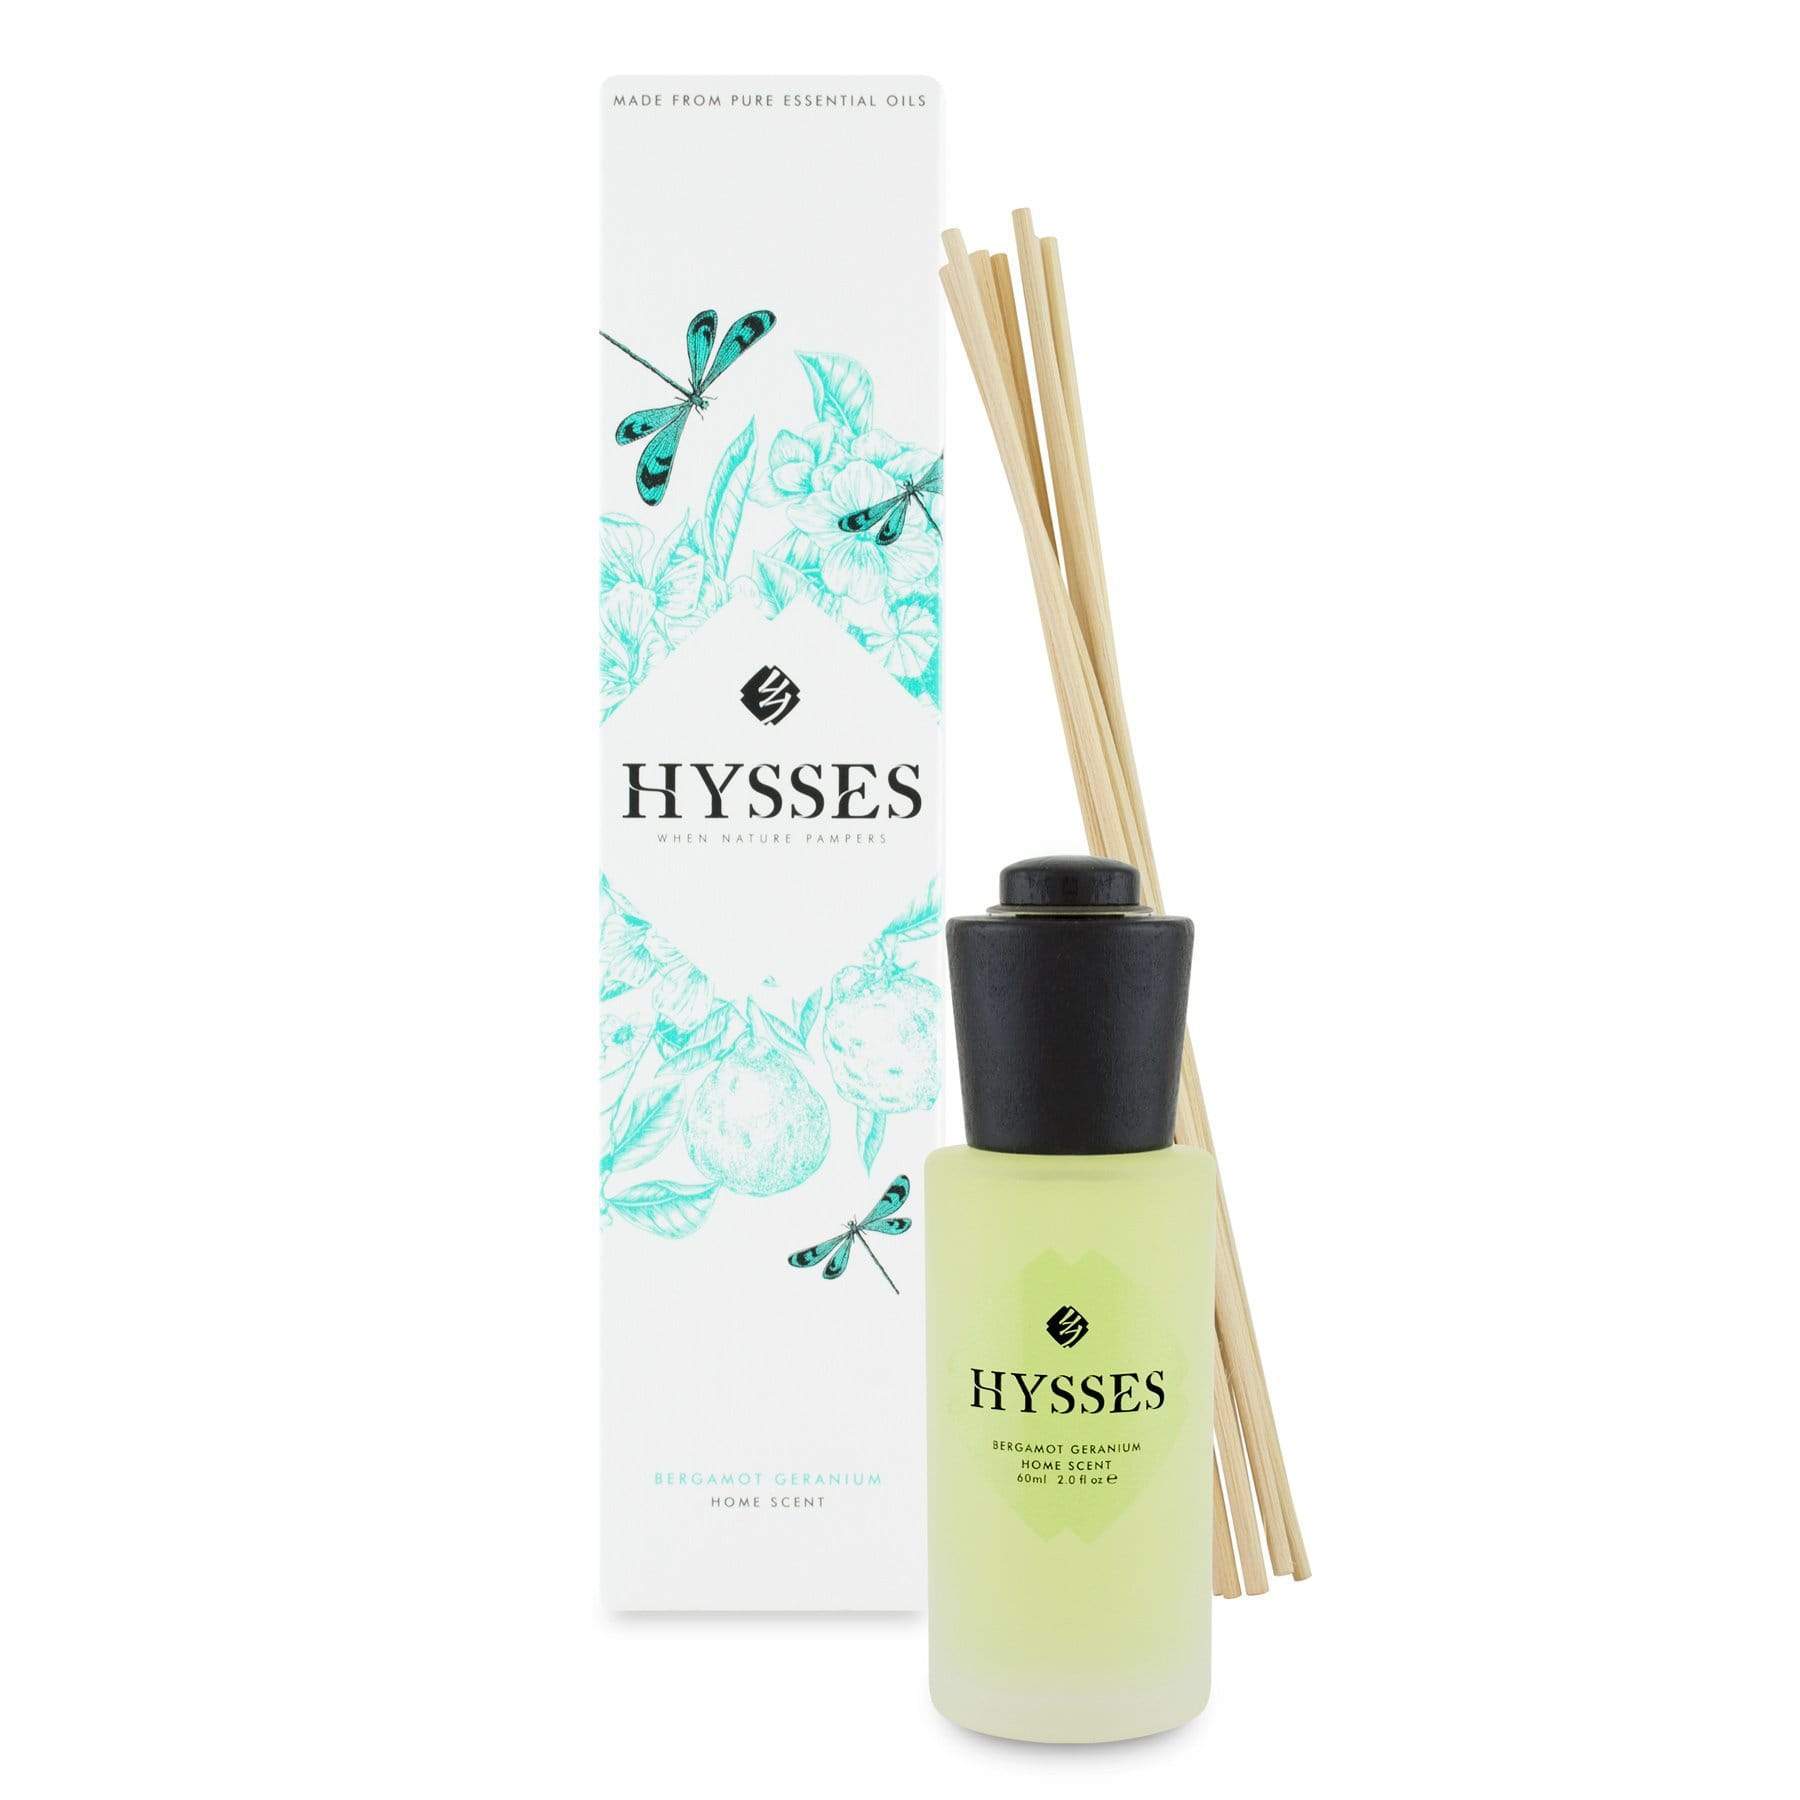 Hysses Home Scents 150ml Home Scent Reed Diffuser Bergamot Geranium